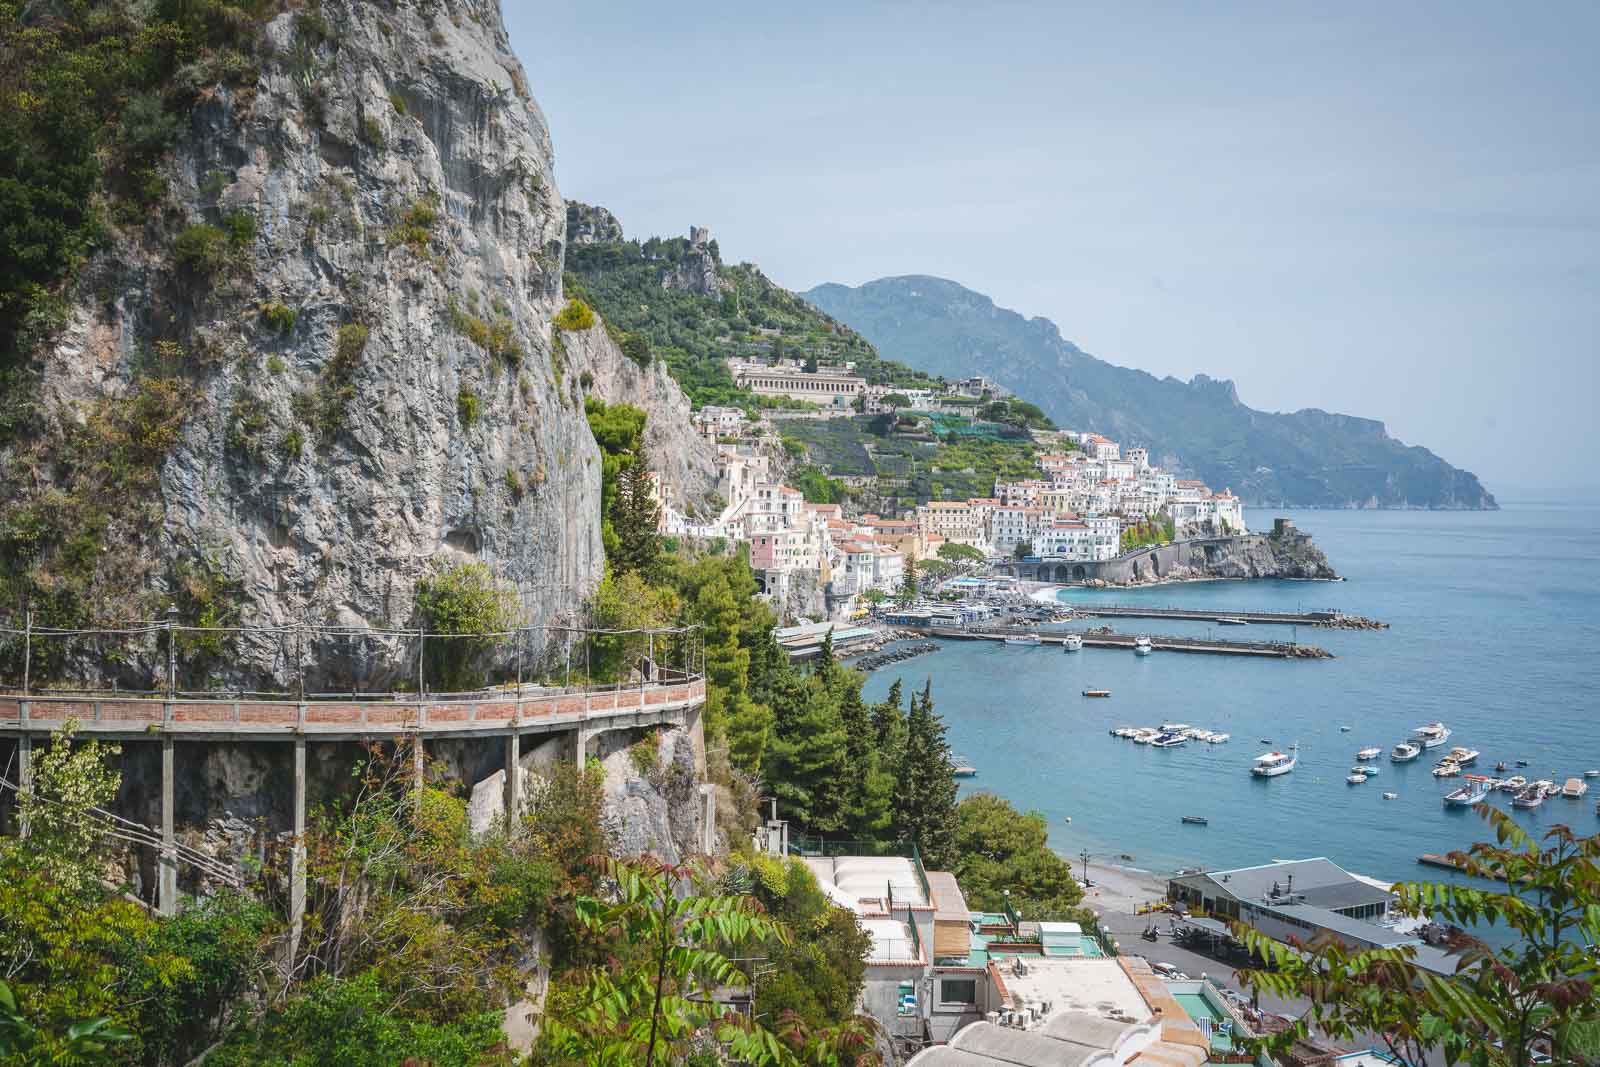 Top things to do along the Amalfi Coast